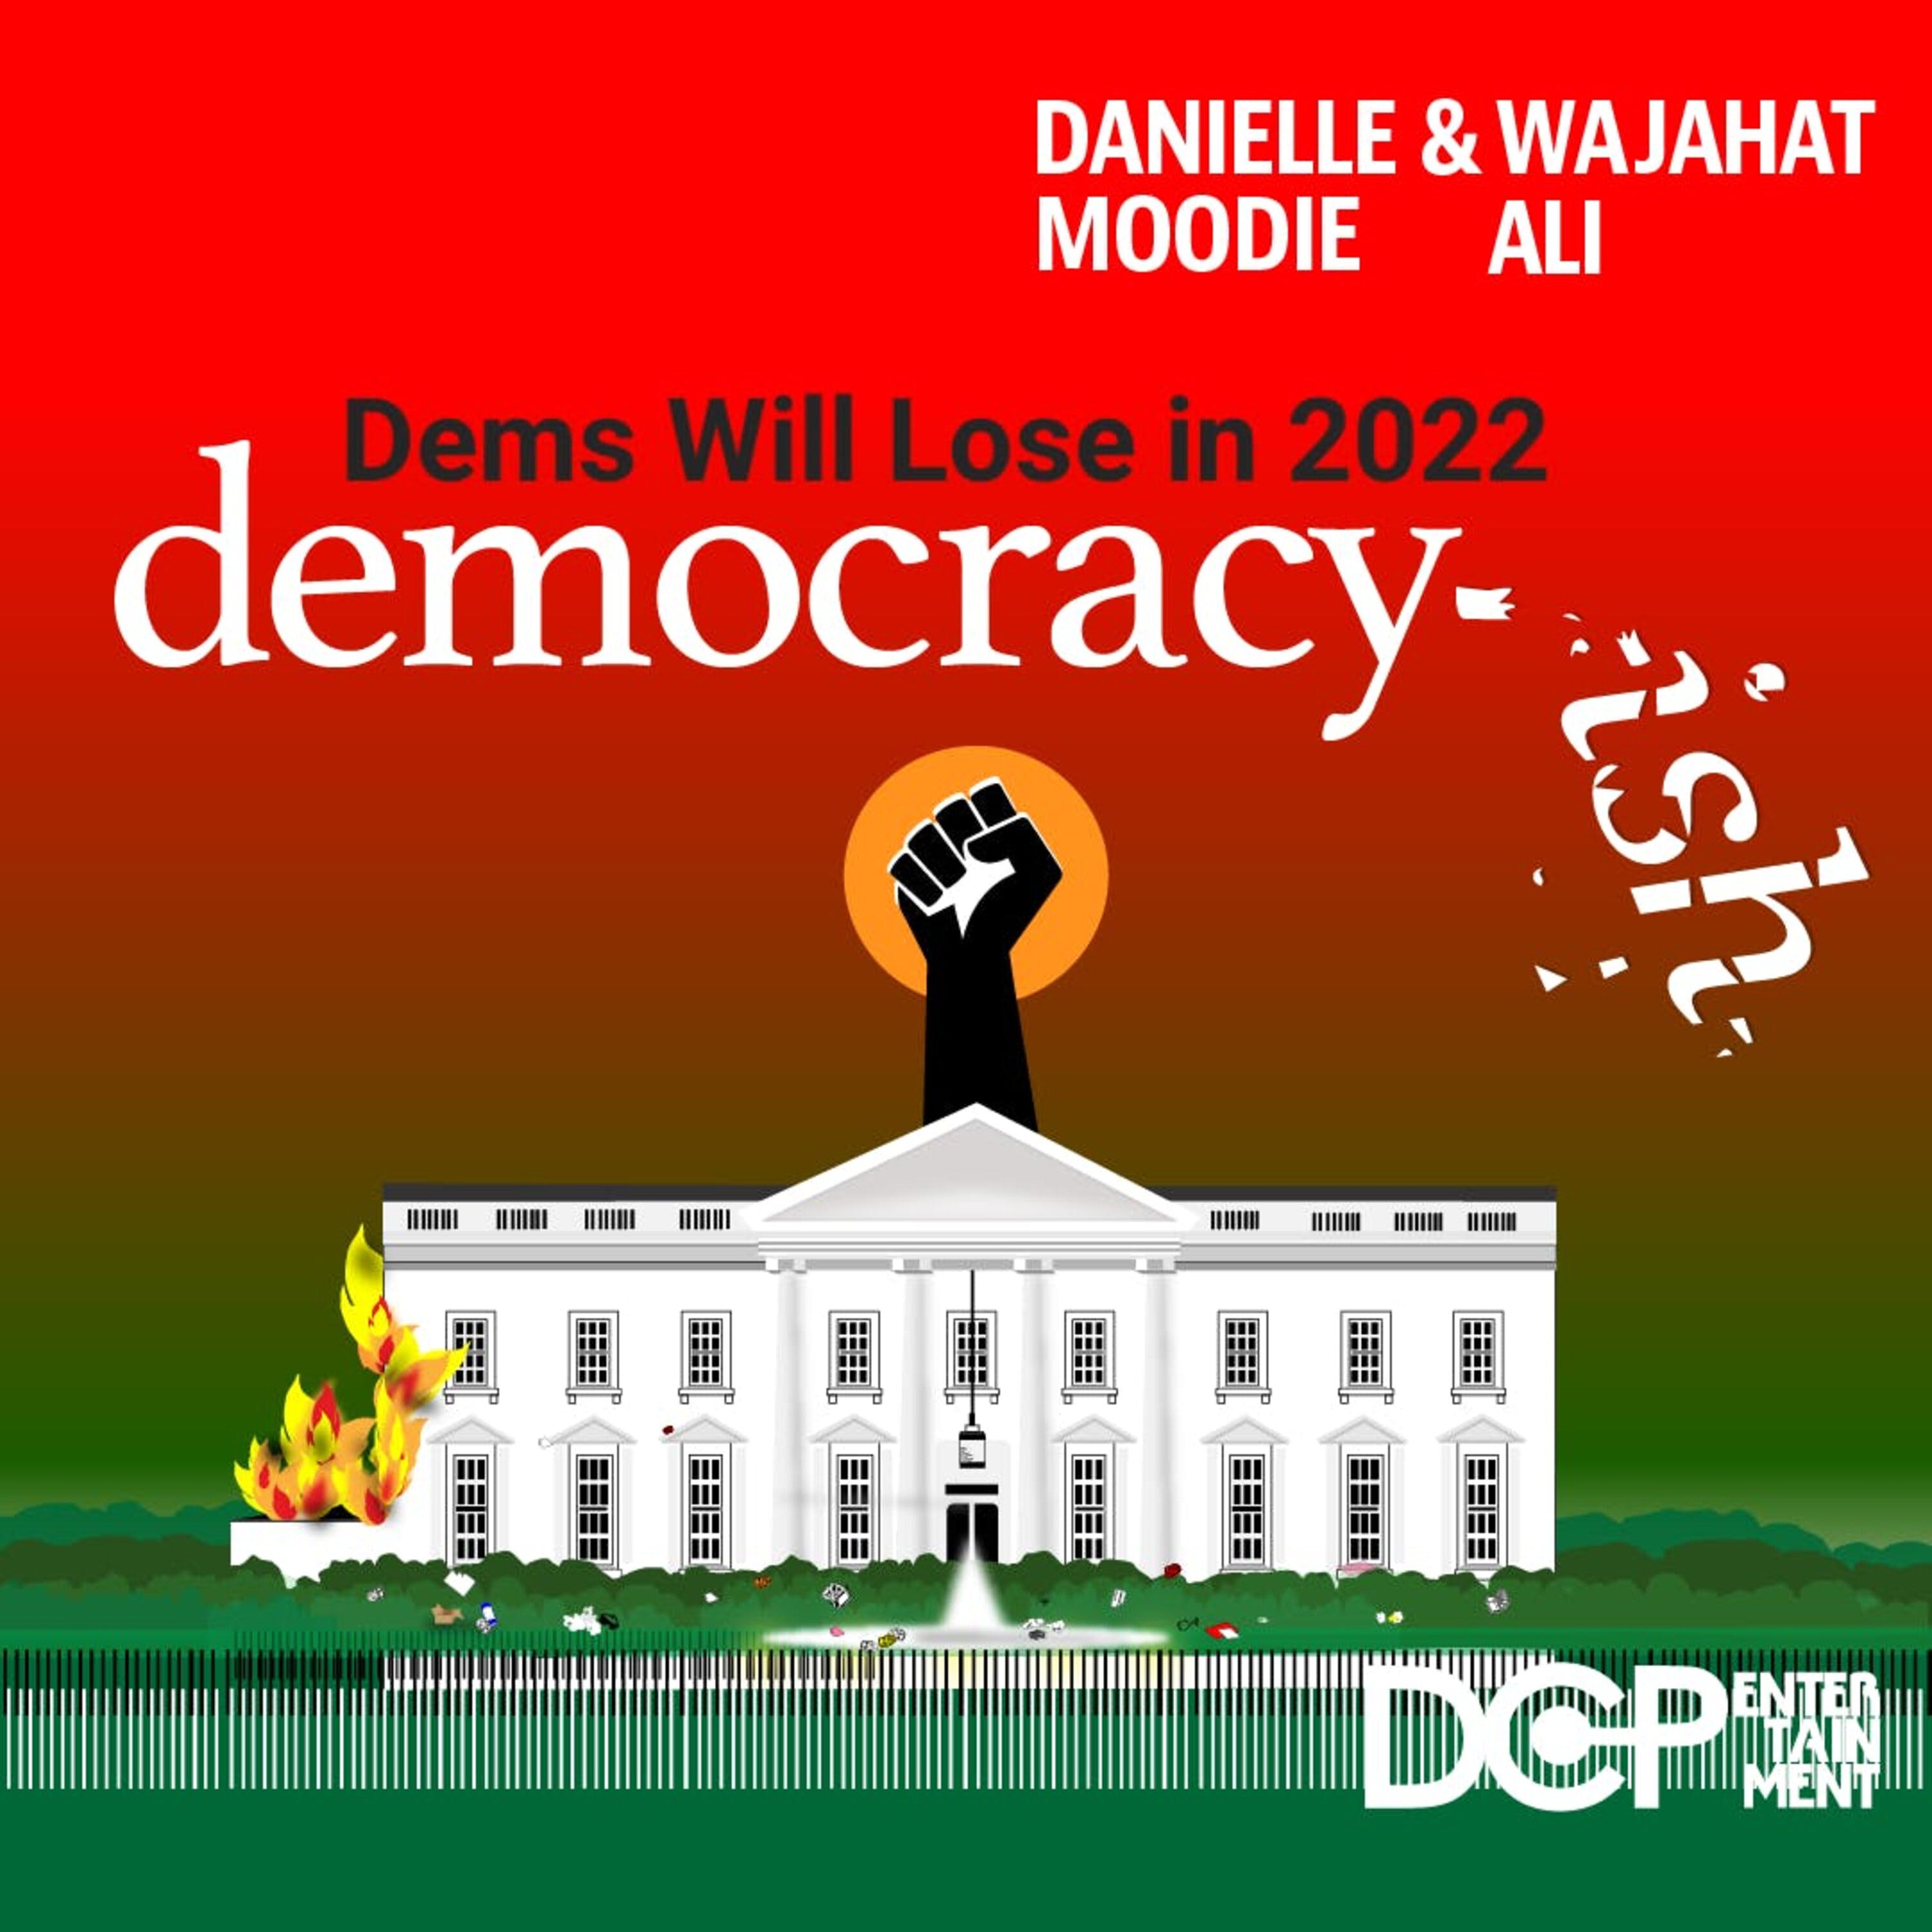 Democrats Will Lose in 2022